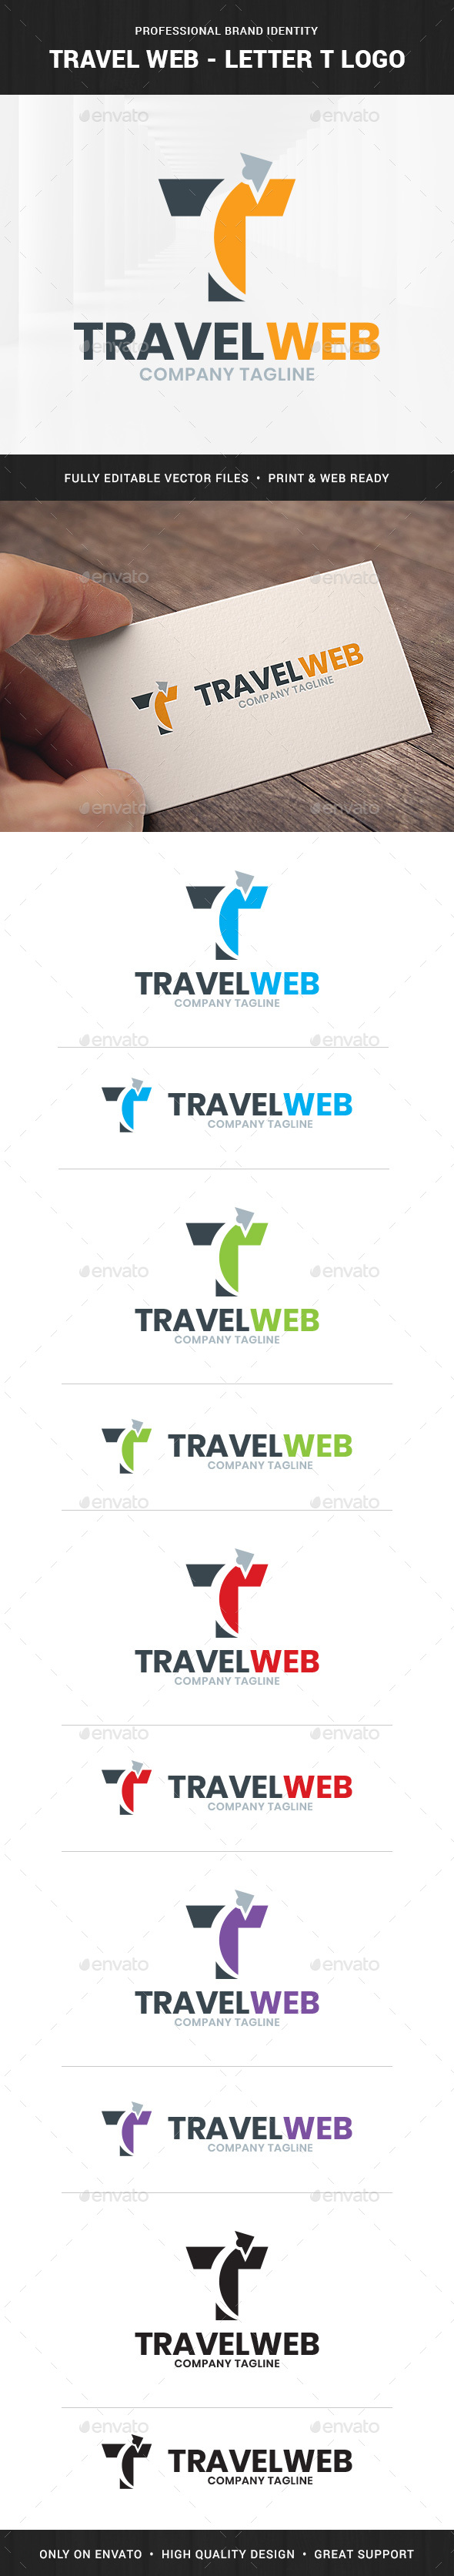 Travel Web - Letter T Logo Template